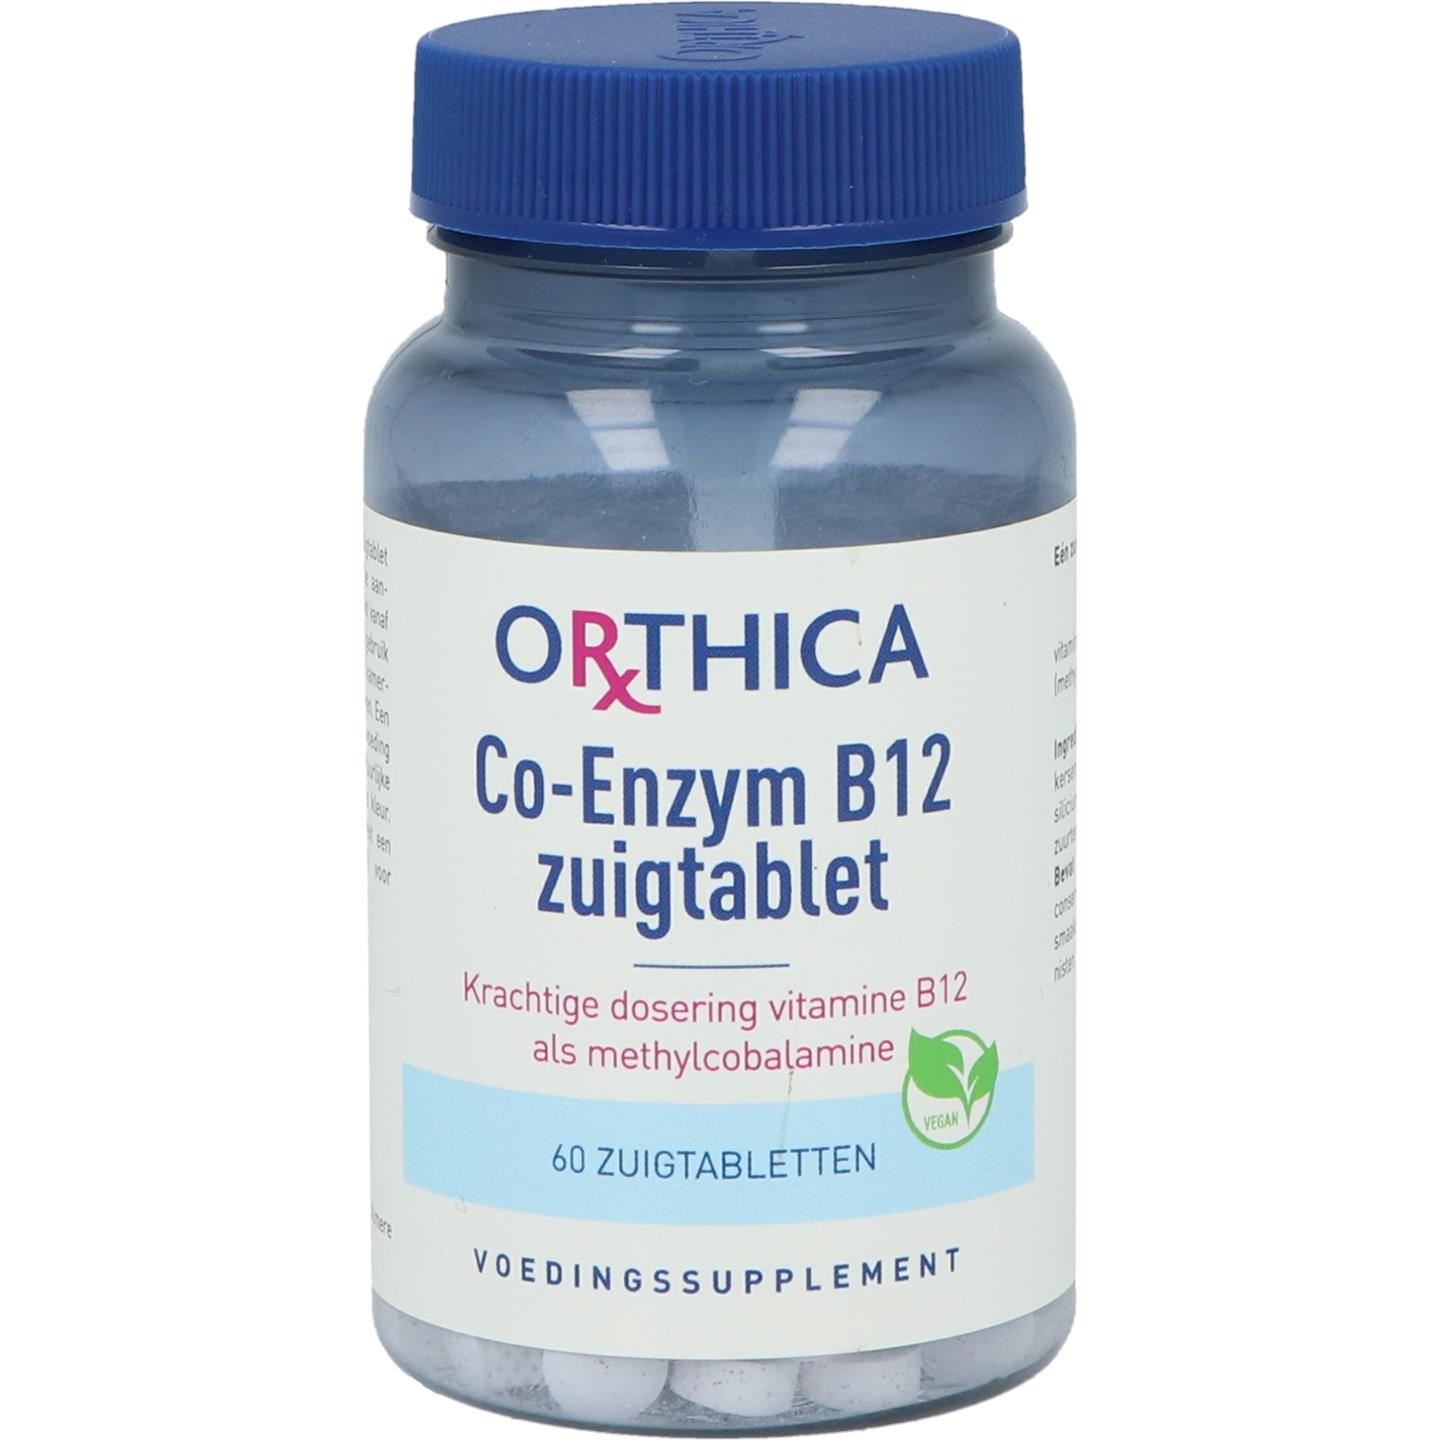 Co-enzym B12 zuigtablet